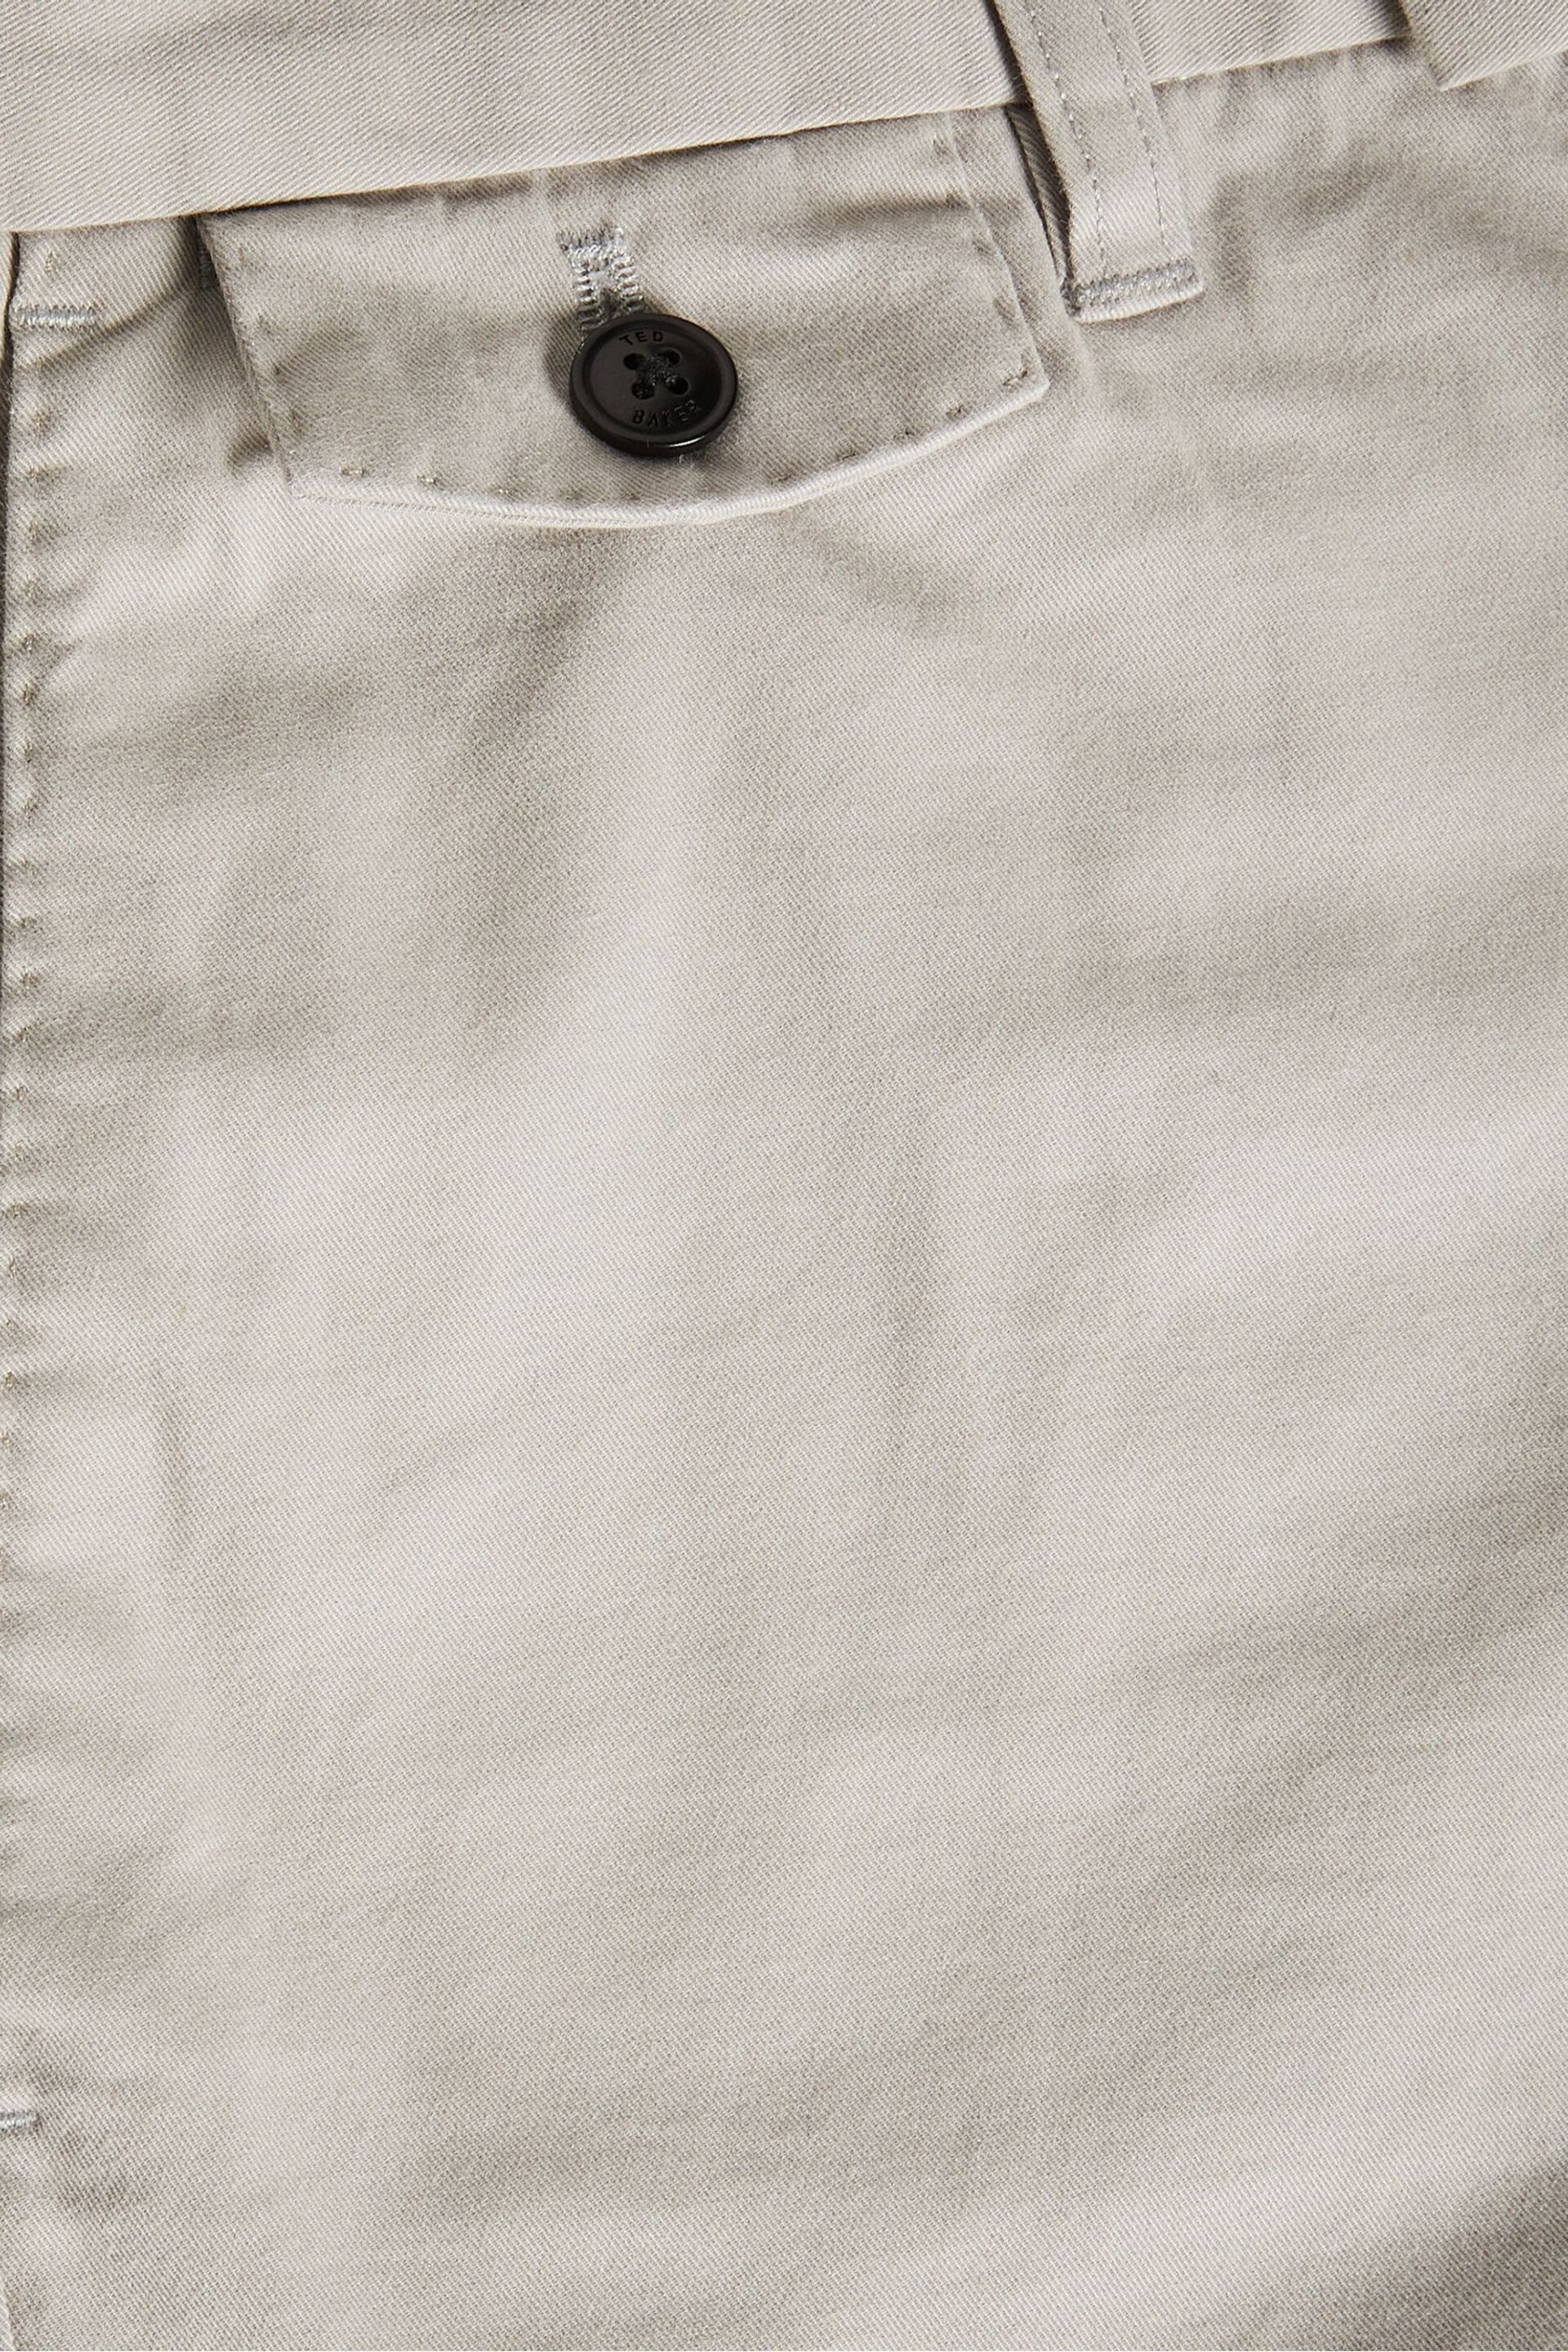 Ted Baker Grey Ashfrd Chino Shorts - Image 5 of 5